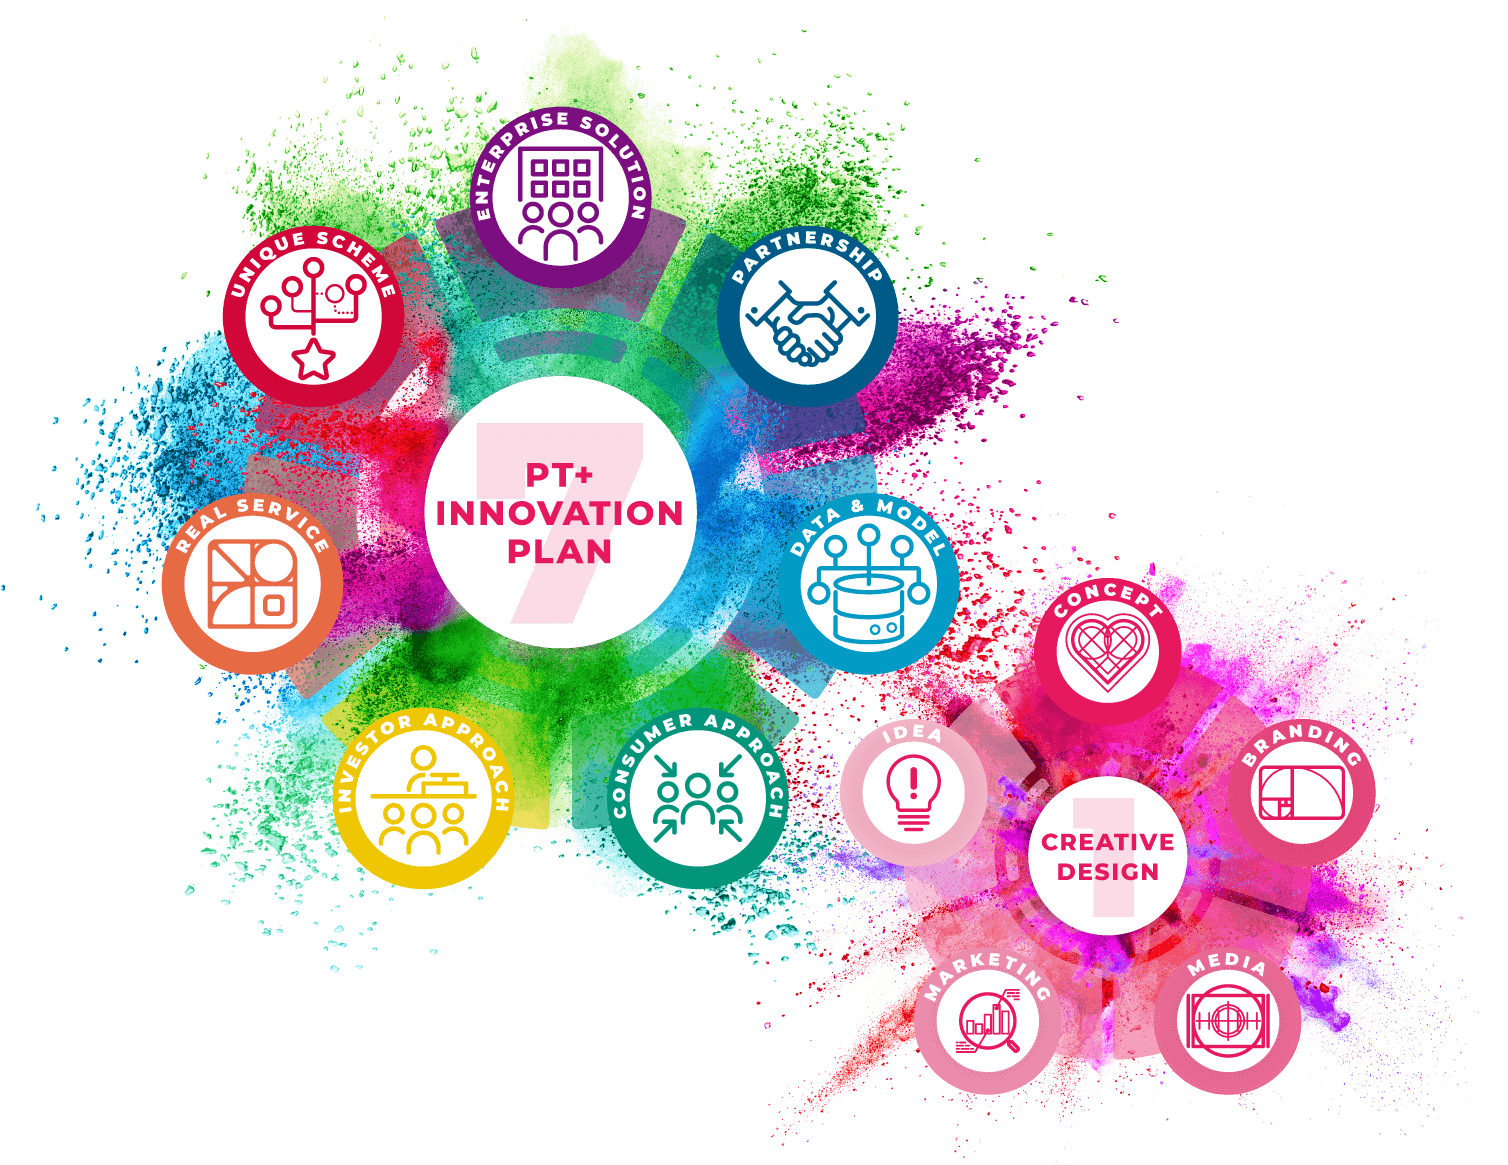 Prop Tech plusが不動産ファンド業界全体のDX化を実現するために掲げる独自戦略である「7plus1」の要素を示した概念図。7つのイノベーション対象分野と、ユニークな創造力・デザイン思考がベースのクリエイティブ領域を+1と表現している。